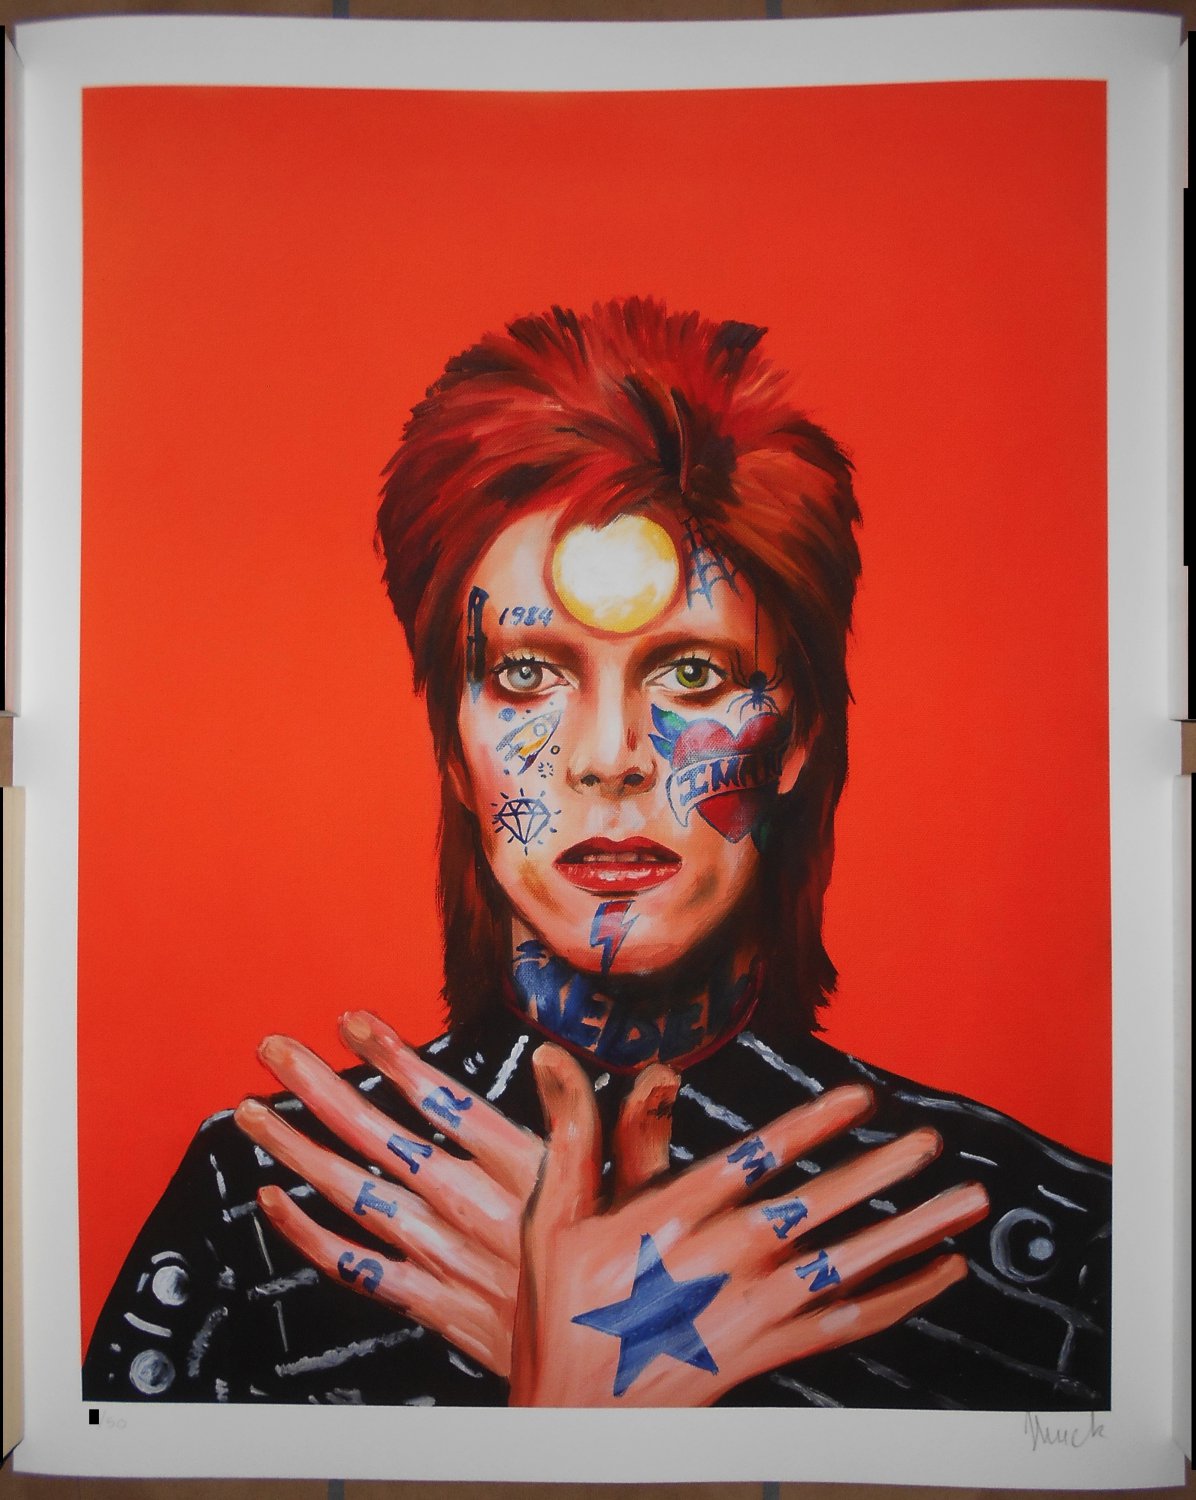 David Bowie Jules Muck Muckrock Giclee Print Poster Signed #/50 Ziggy Stardust